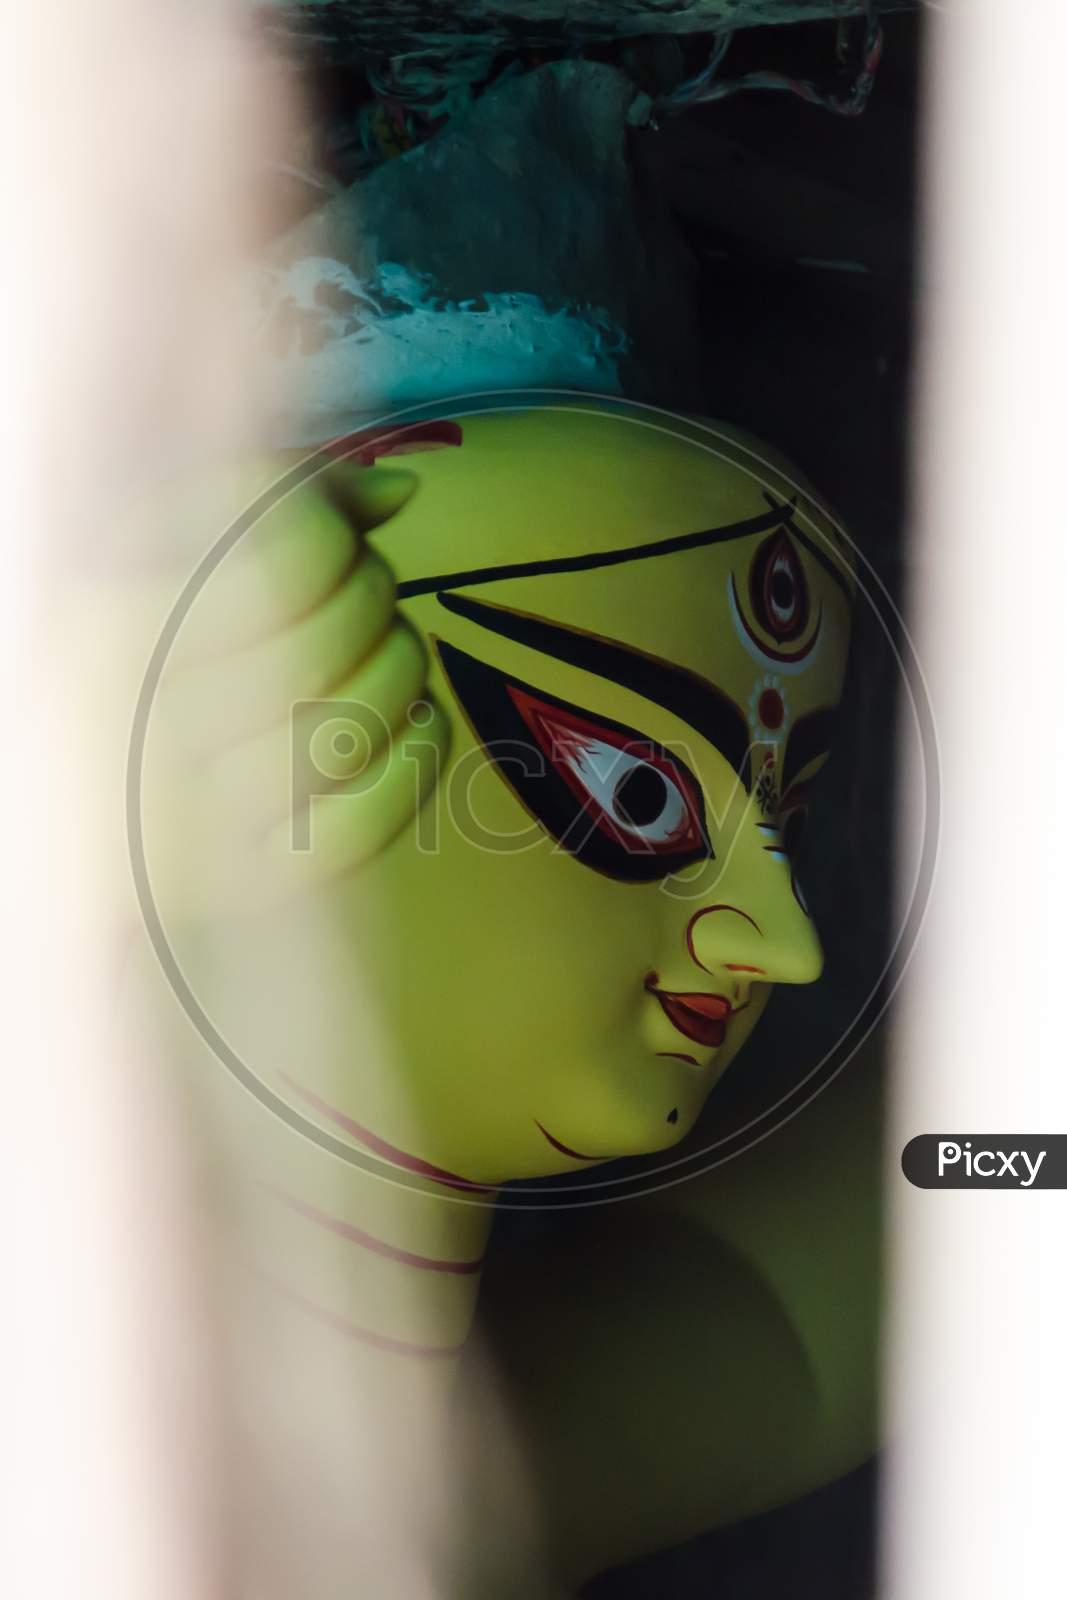 Beautiful idol of Goddess Durga